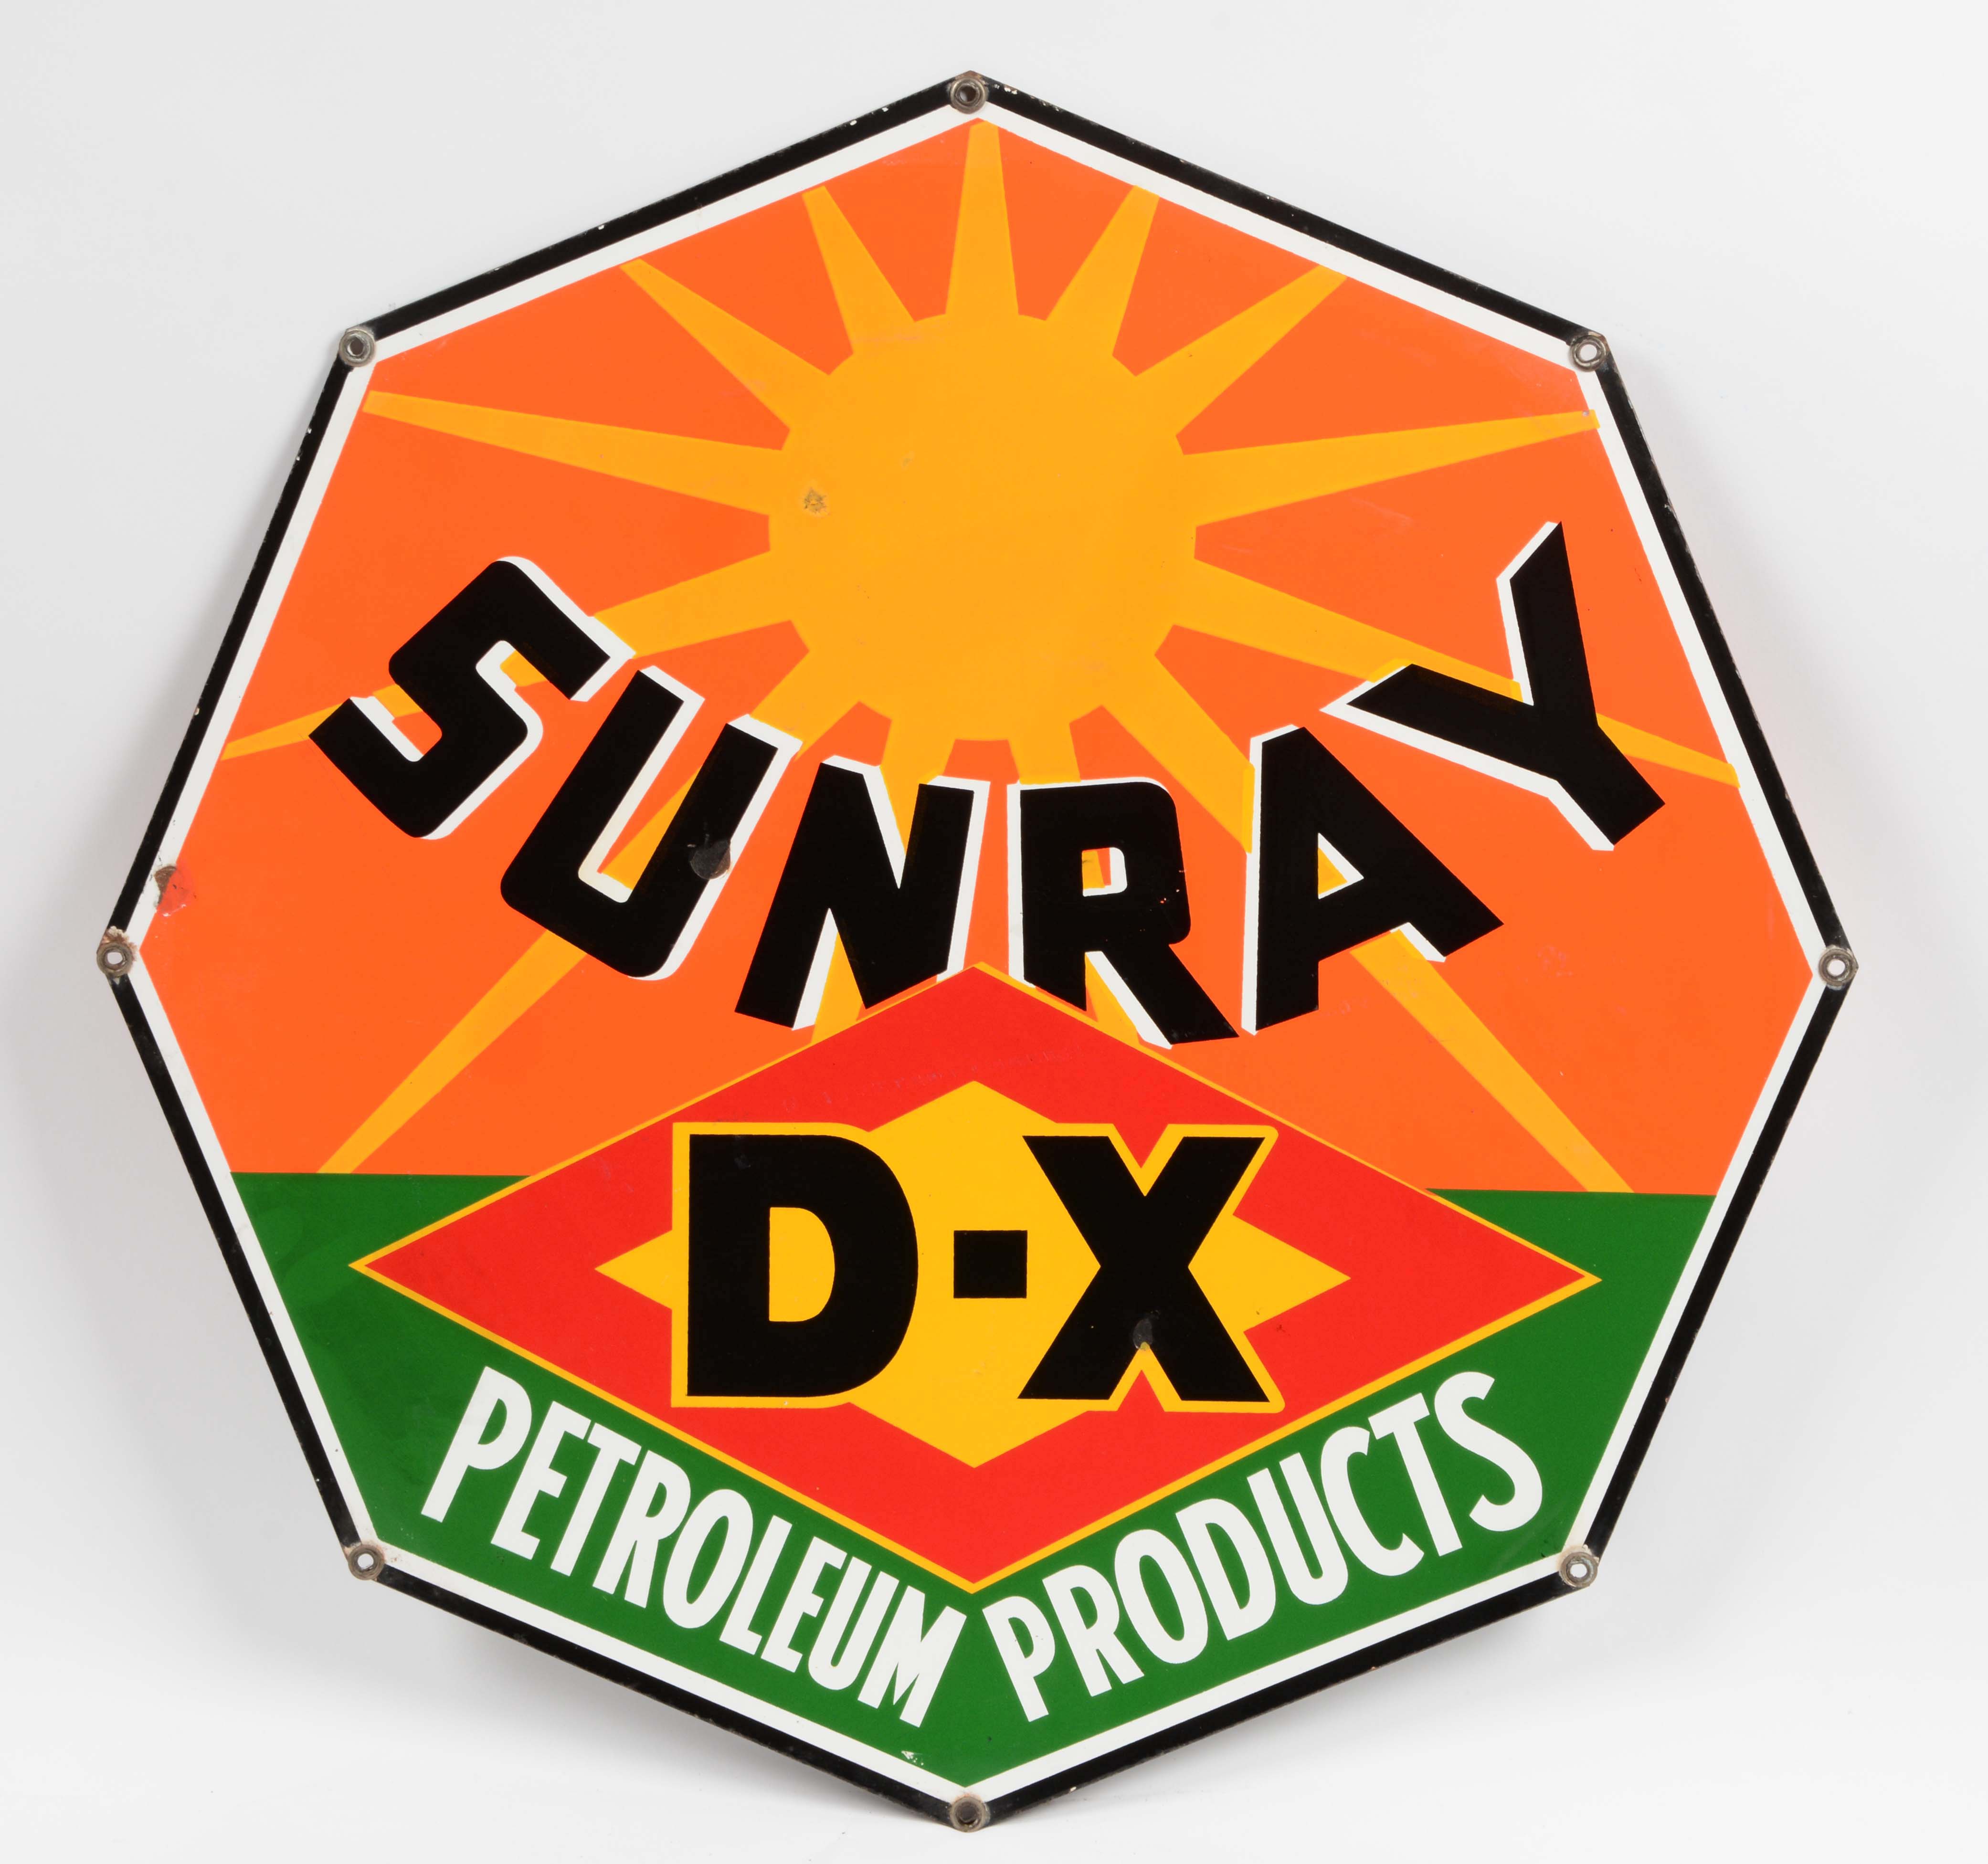 Sunray D-X Petroleum Products Porcelain Diecut Sign, estimated at $4,000-6,000.